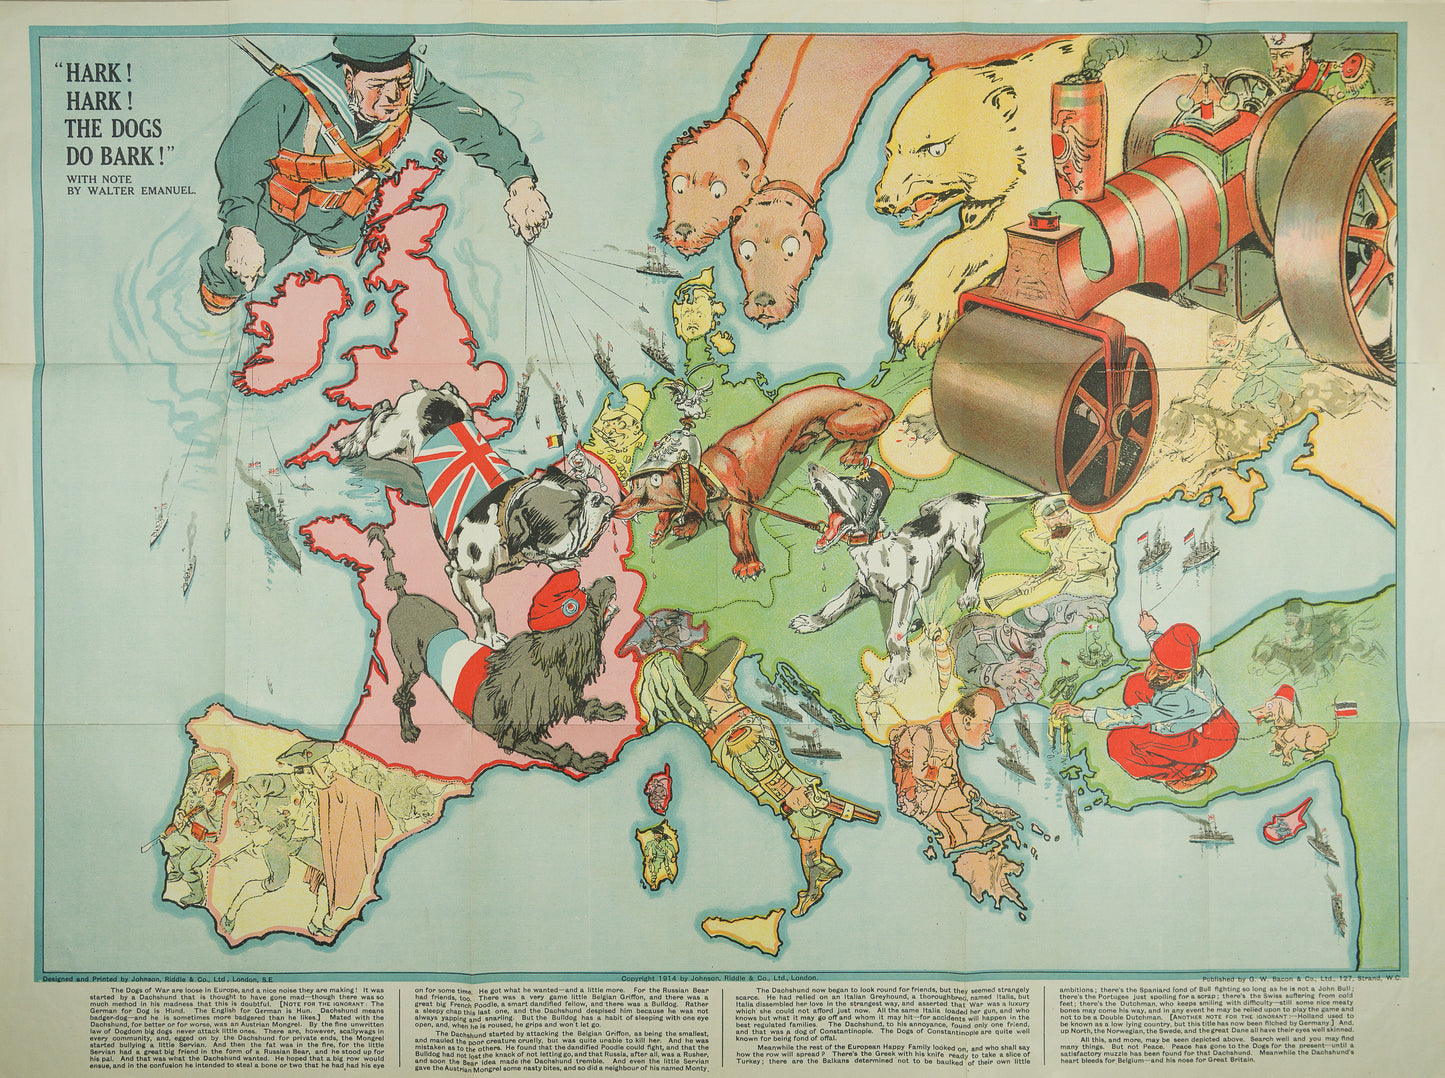 Hark! Hark! The Dogs do Bark! Serio-Comique Map of Europe at War.